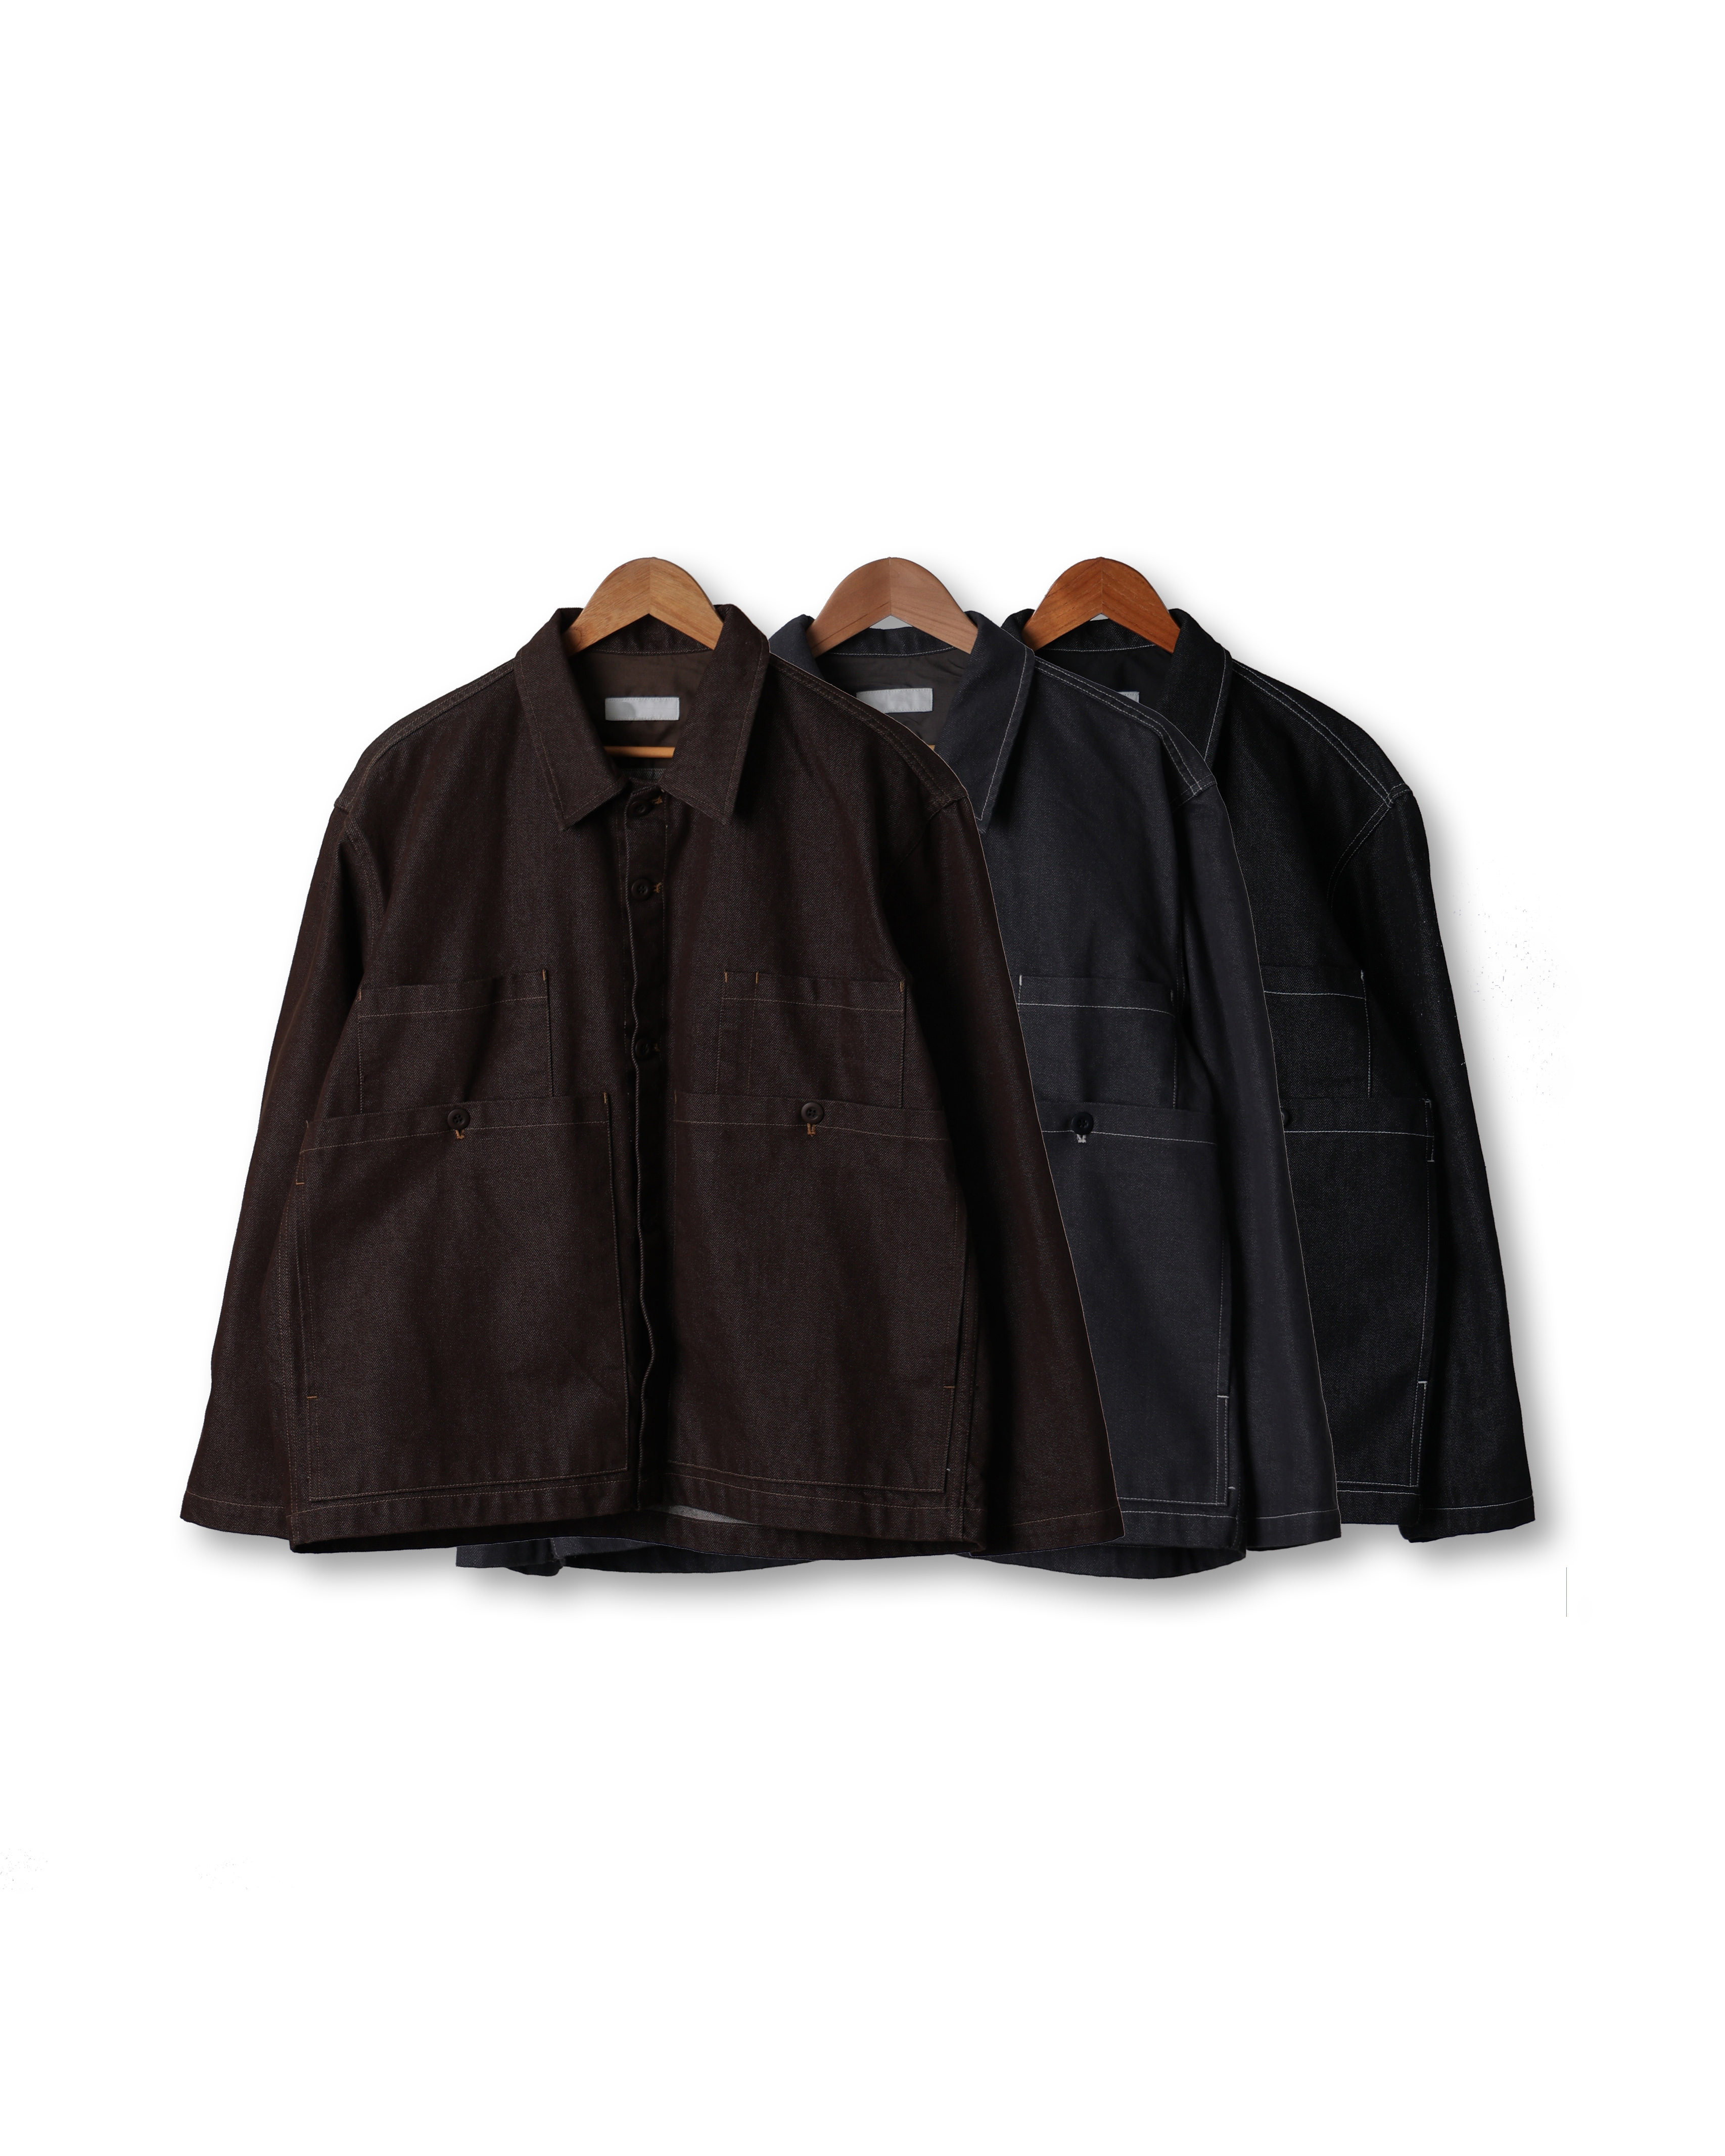 INTO Work Colored Denim Jacket (Black/Gray/Brown)